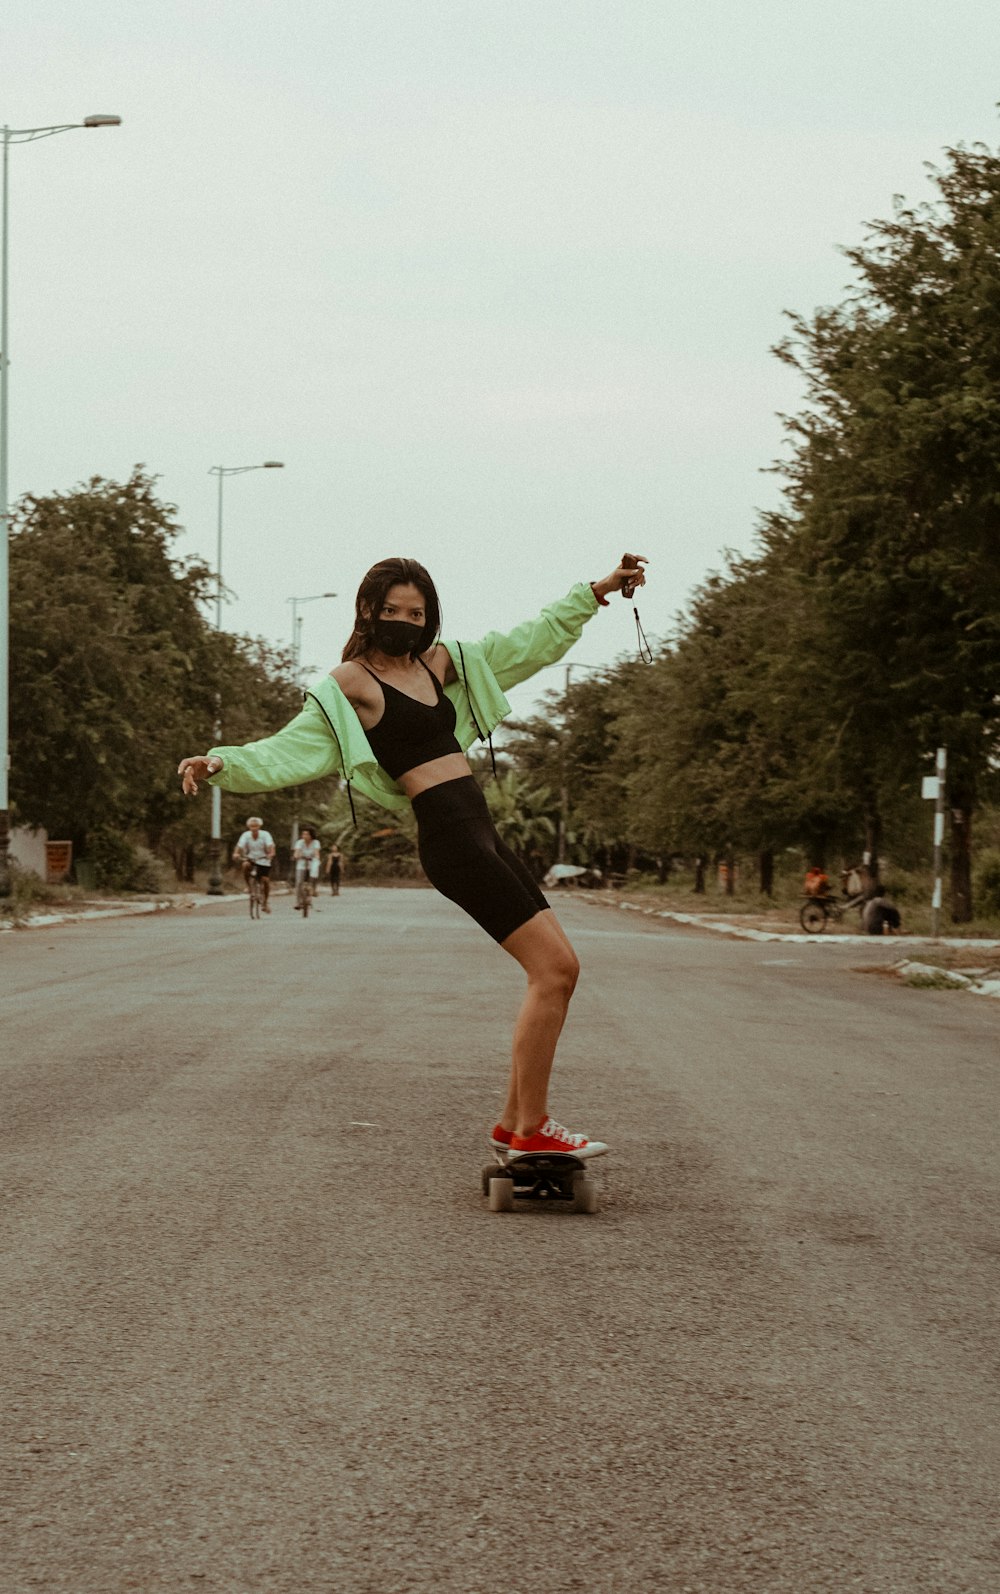 Girl Skateboard Pictures | Download Free Images on Unsplash